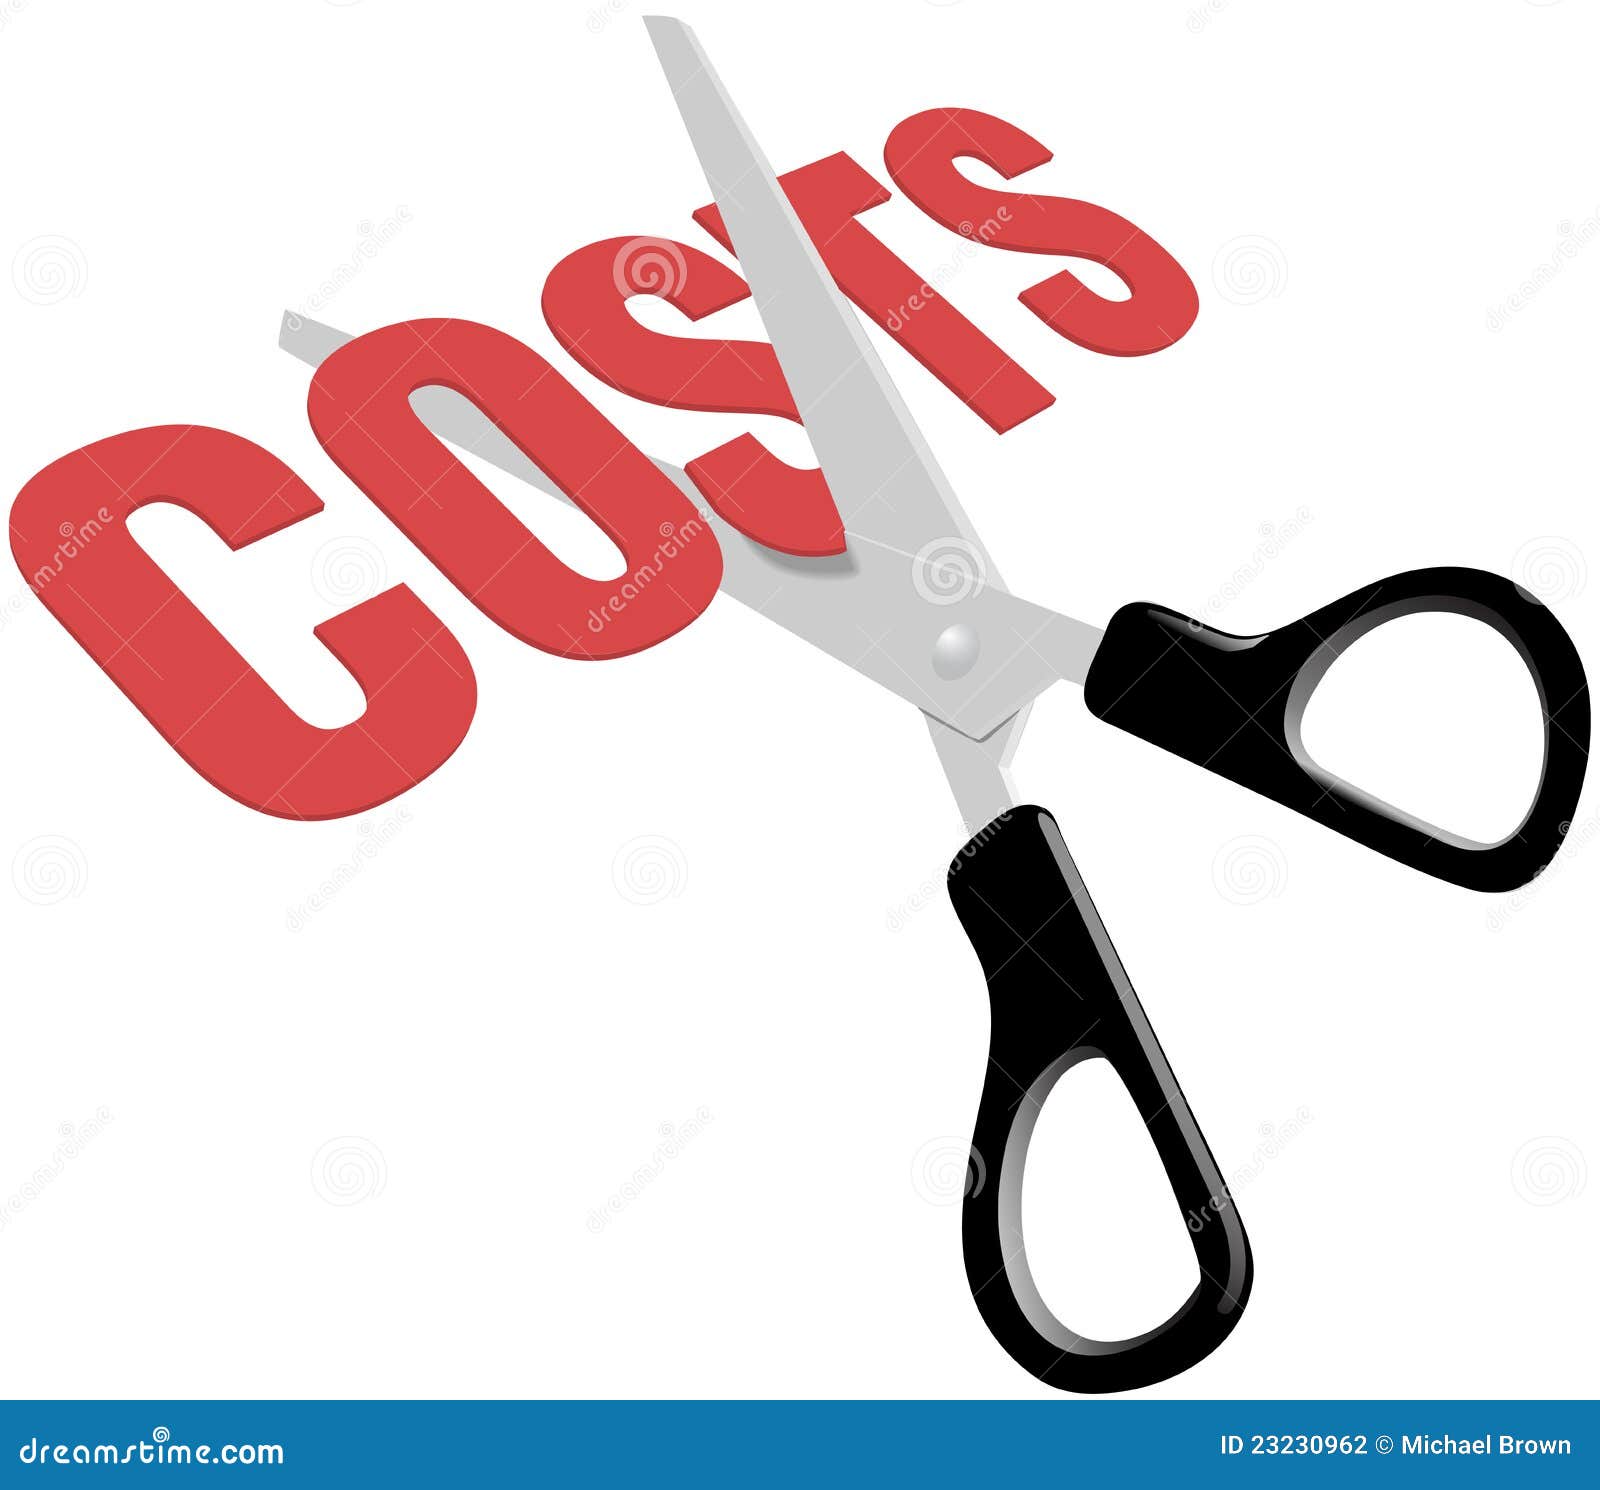 scissors cut business expense costs